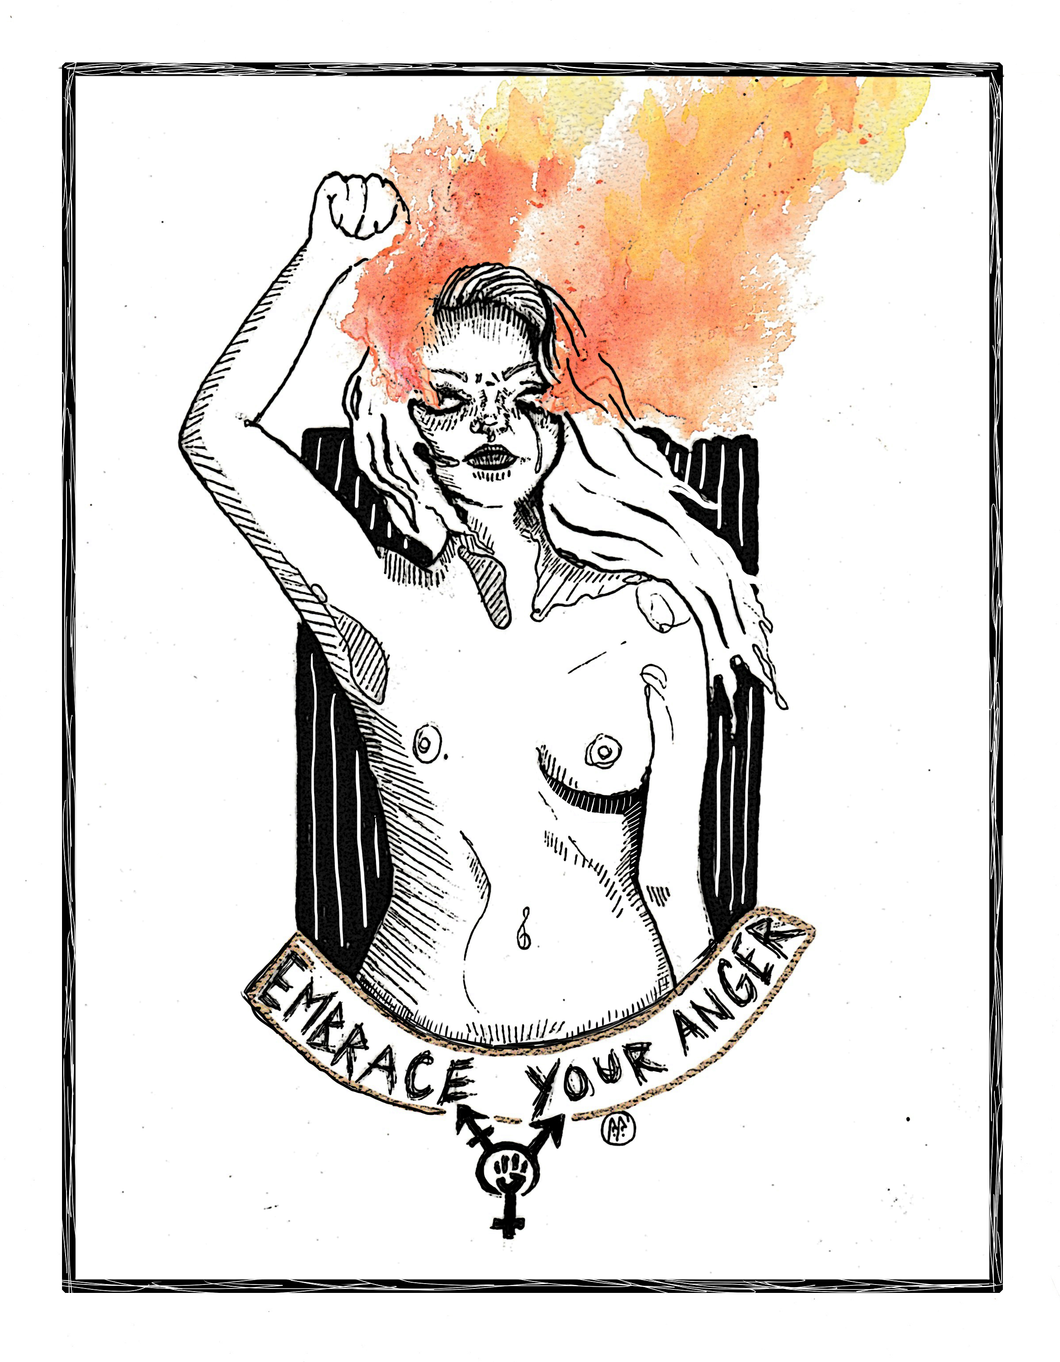 Embrace your anger - 8x10 feminist art - Print on paper